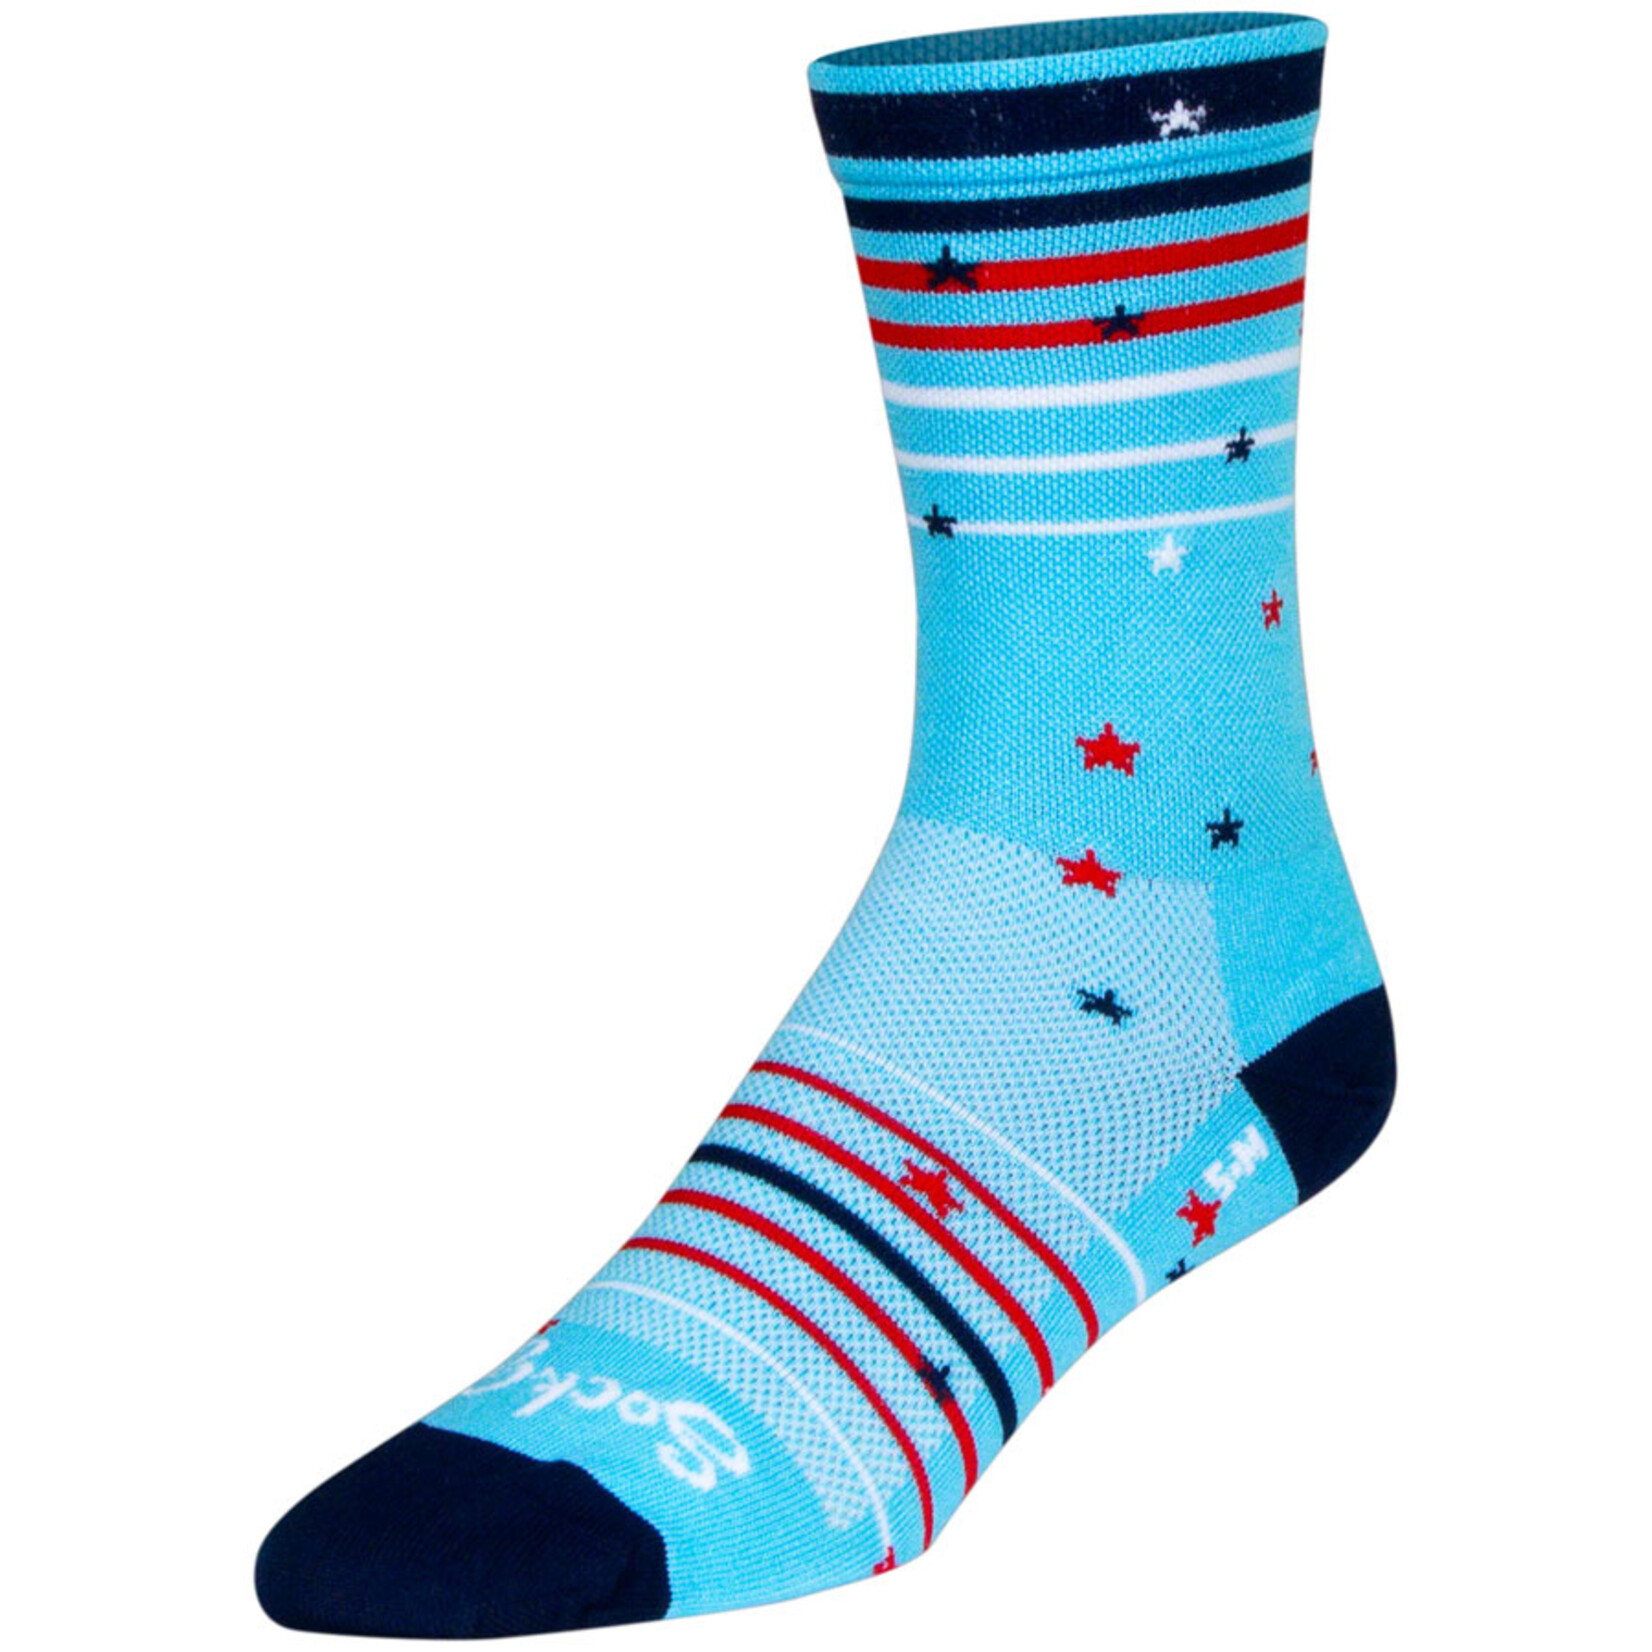 SockGuy SockGuy Sparkler Crew Socks - 6 inch, Red/White/Blue, Large/X-Large